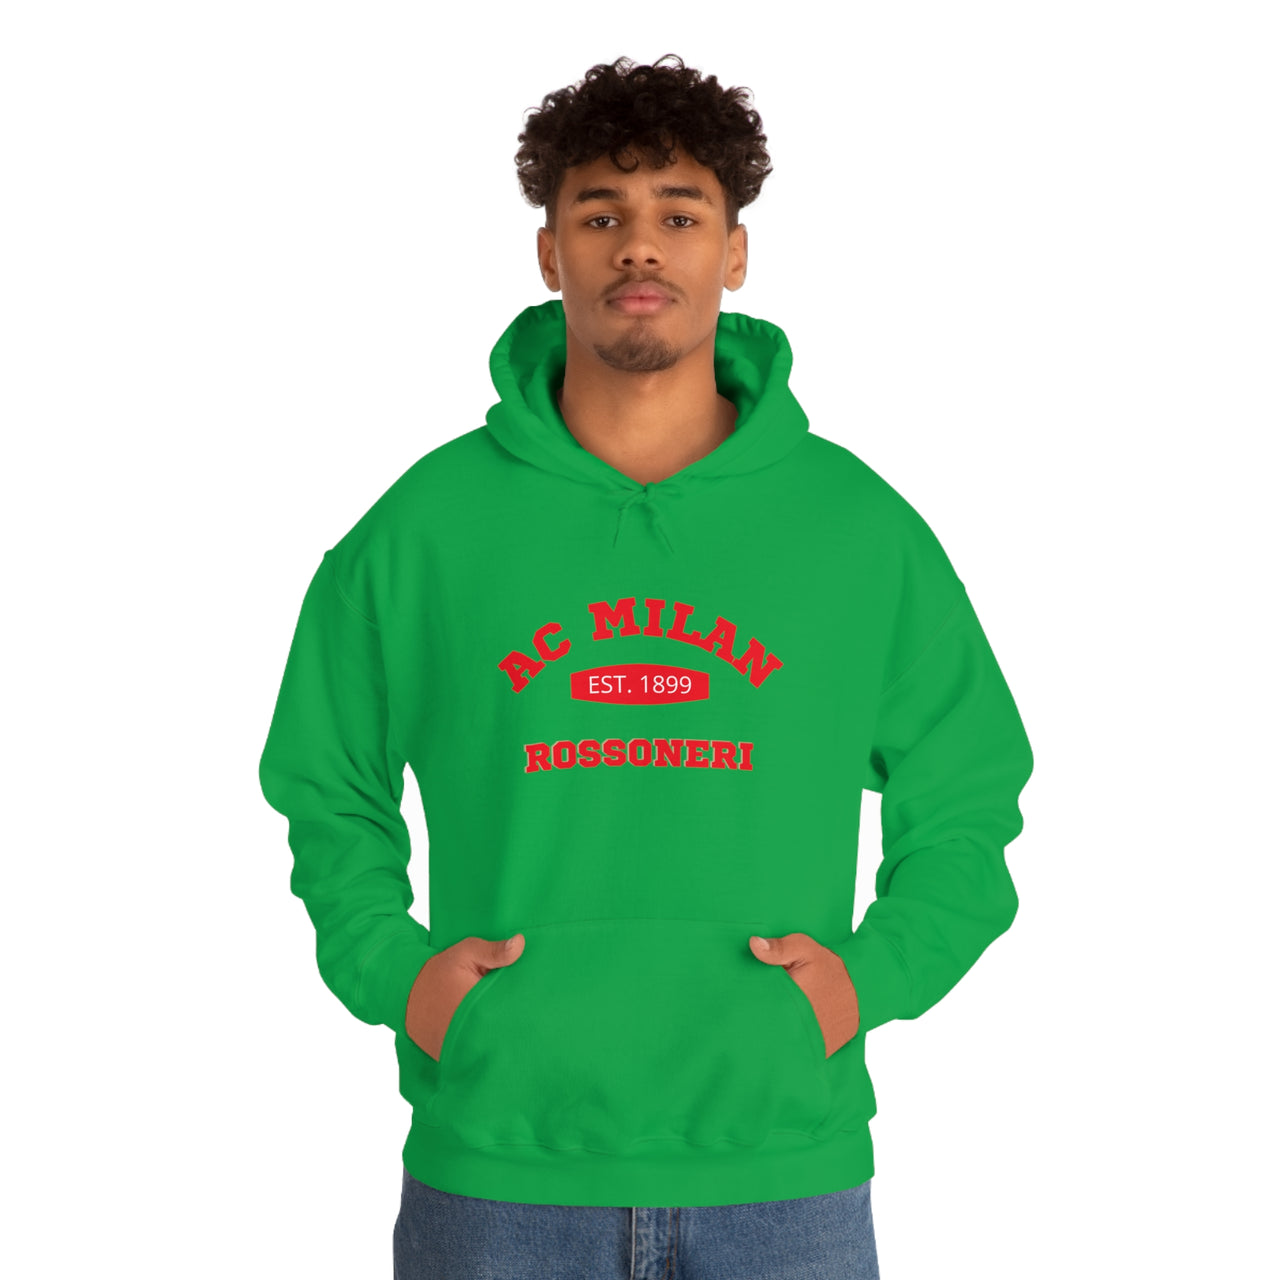 AC Milan Unisex Hooded Sweatshirt